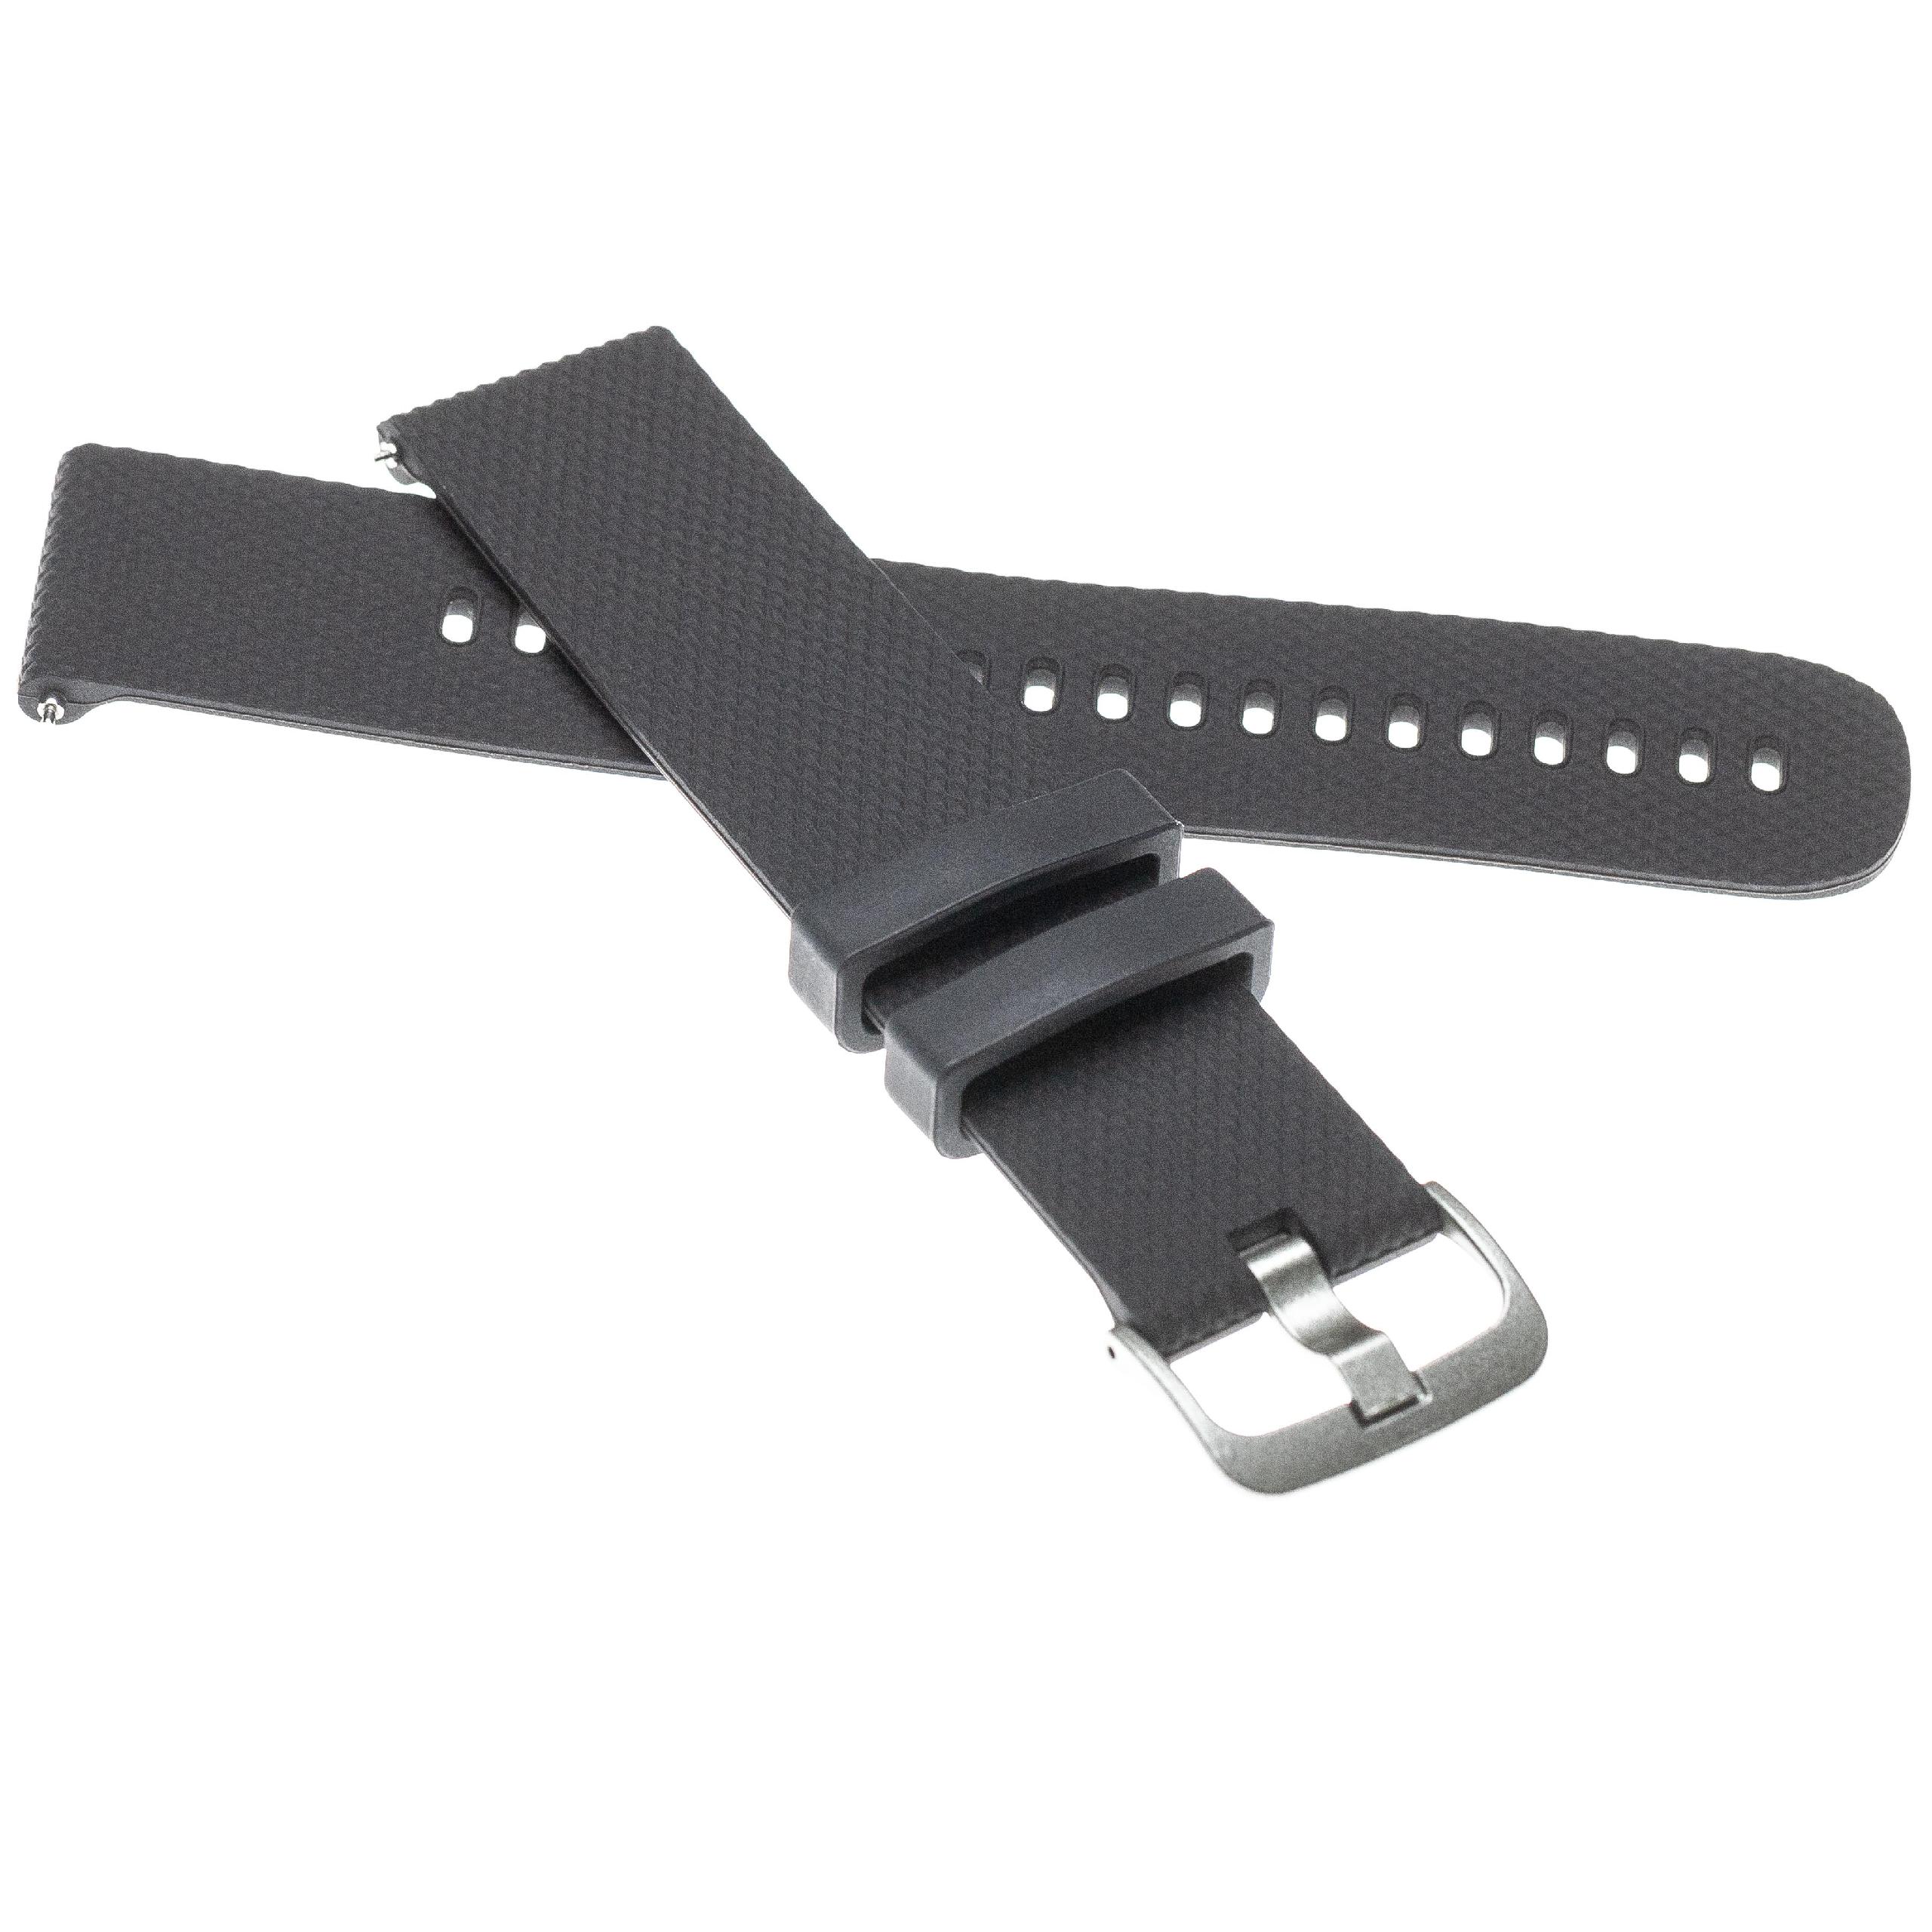 Armband für Polar Vantage Smartwatch - 11,5 + 10,5 cm lang, Silikon, schwarz